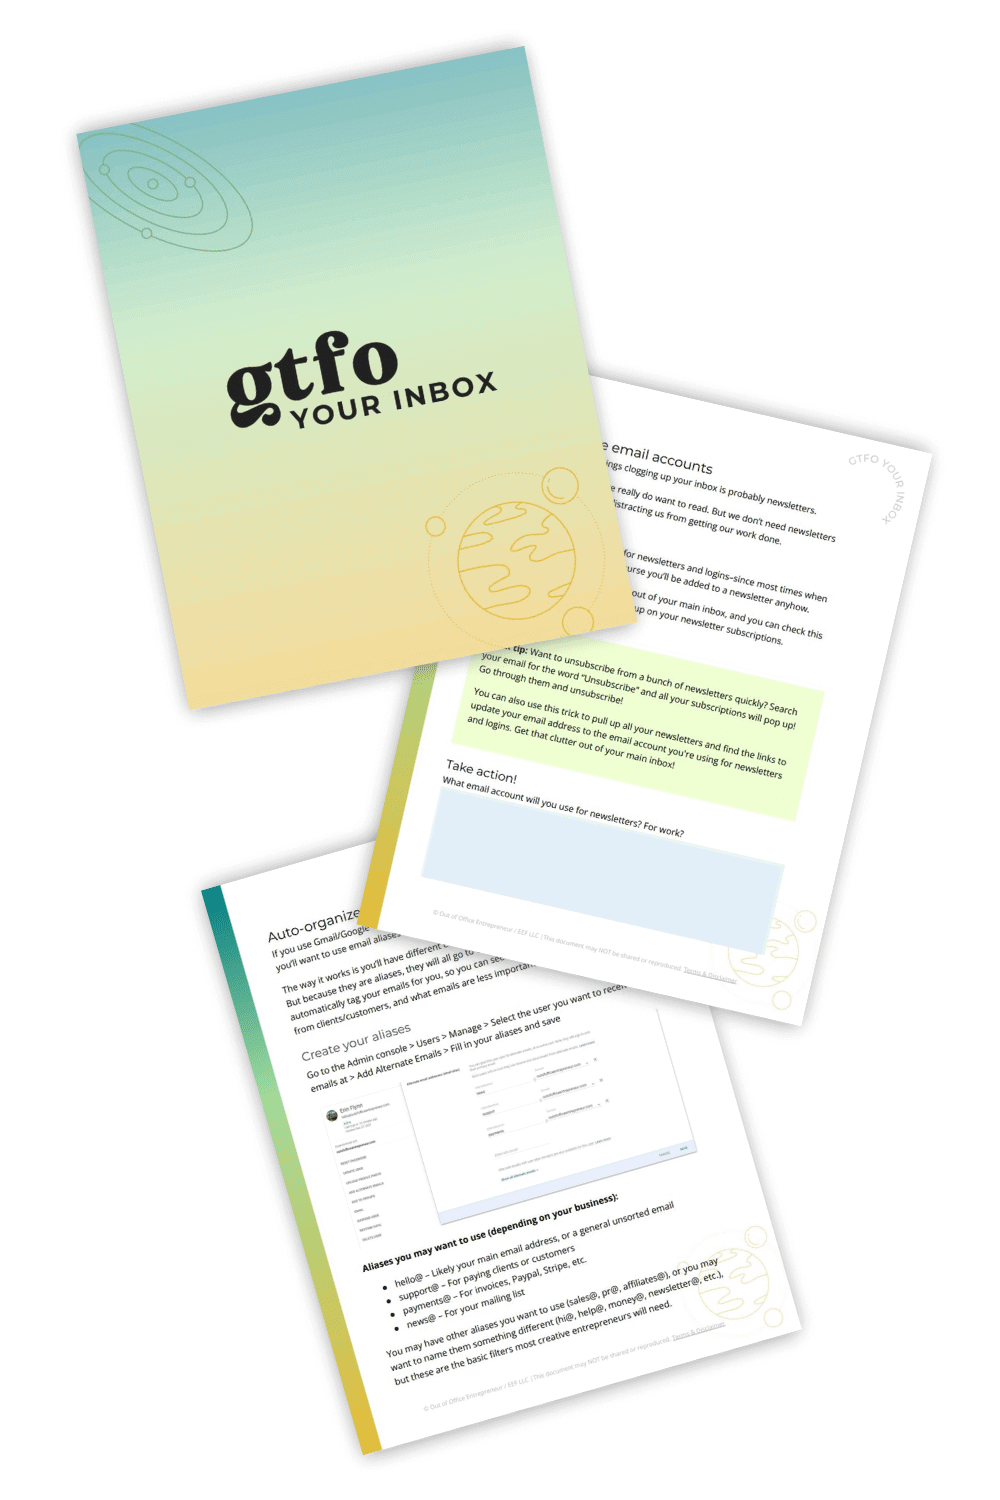 GTFO Your Inbox Workbook